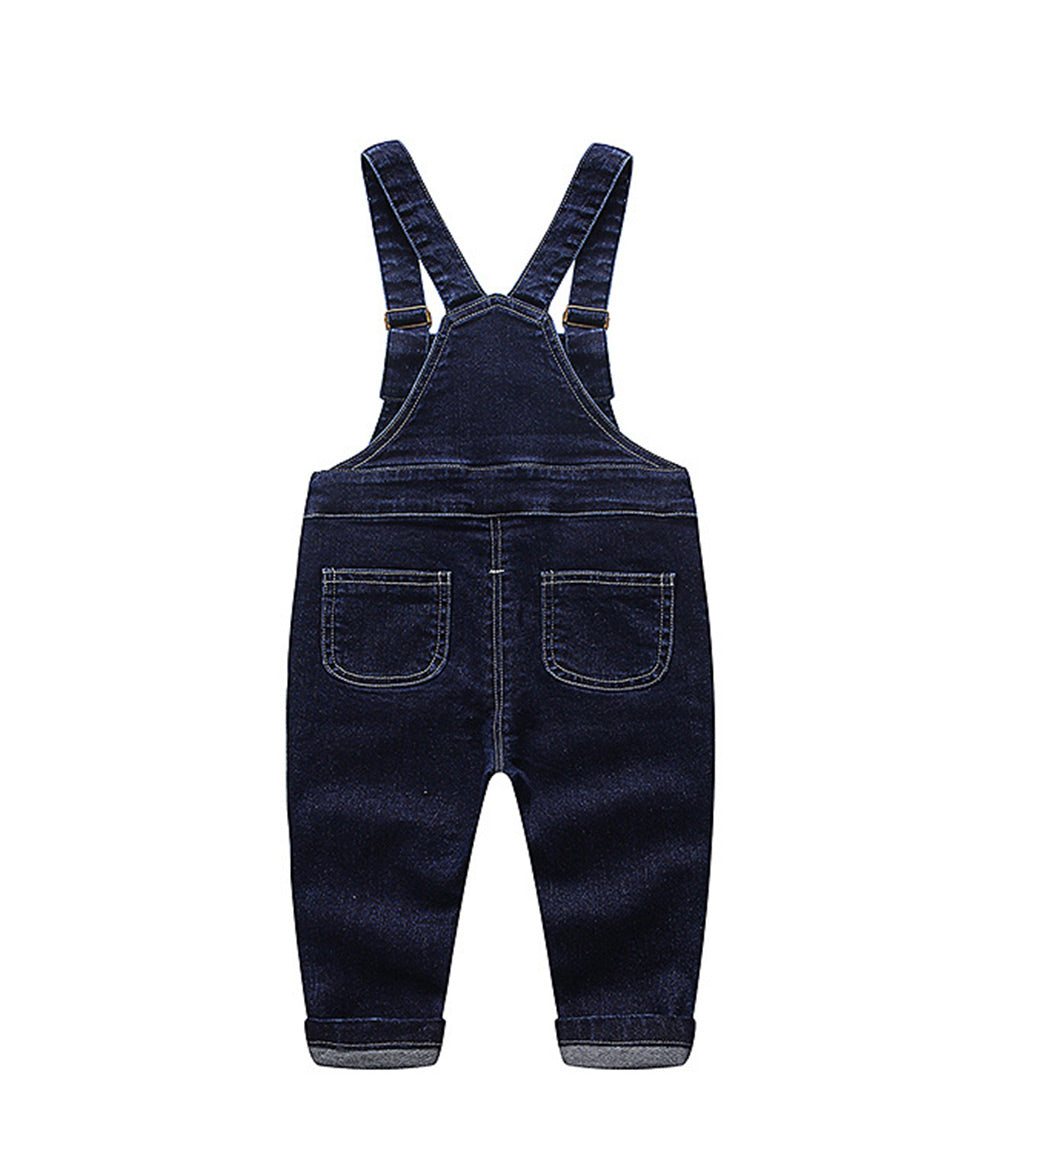 Blue Denim Dungaree Boys Girls Jeans Overalls